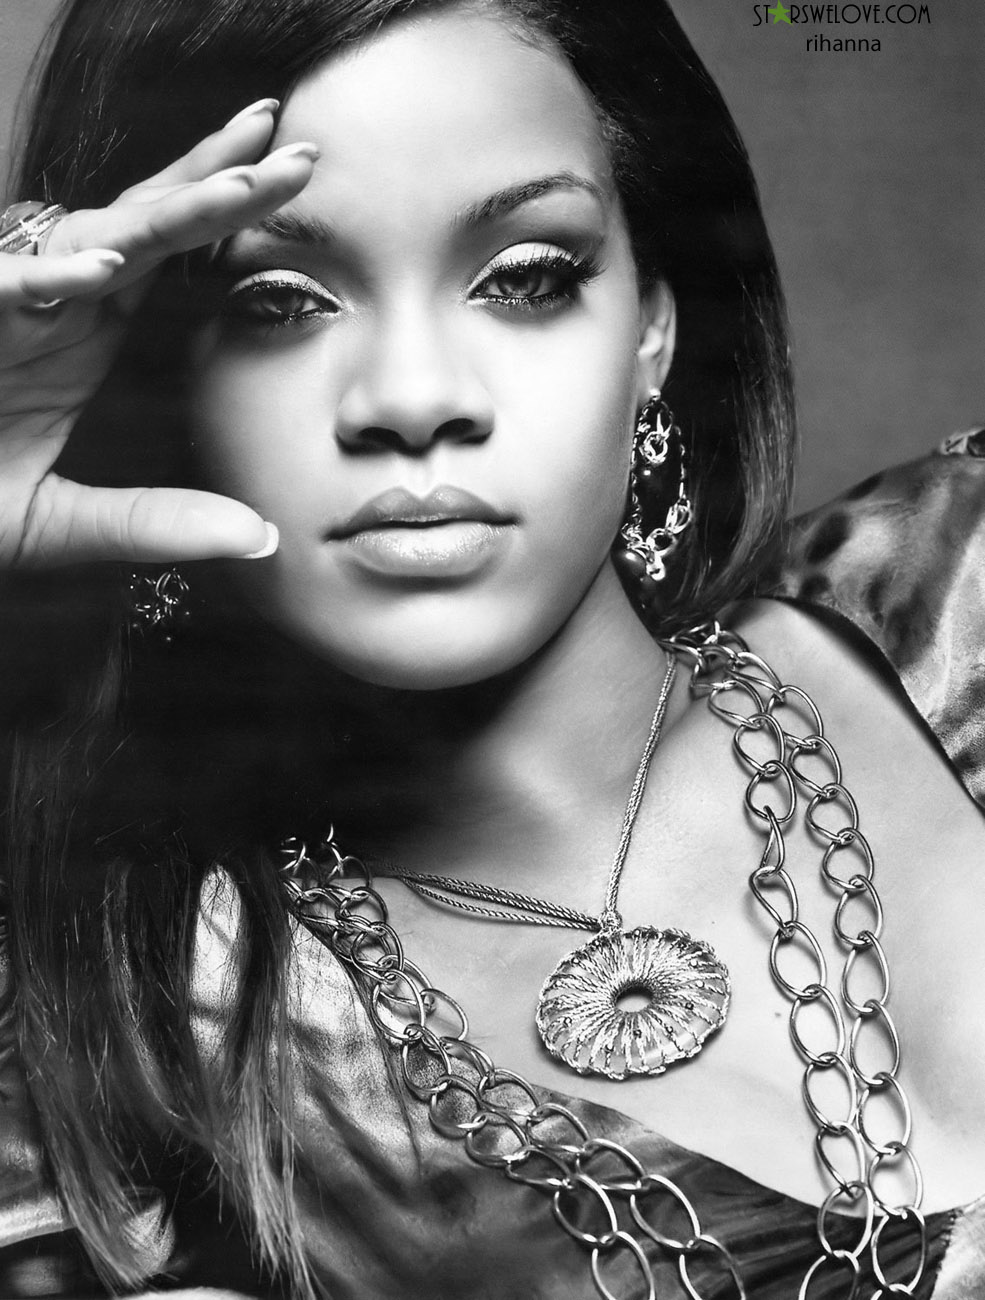 General photo of Rihanna